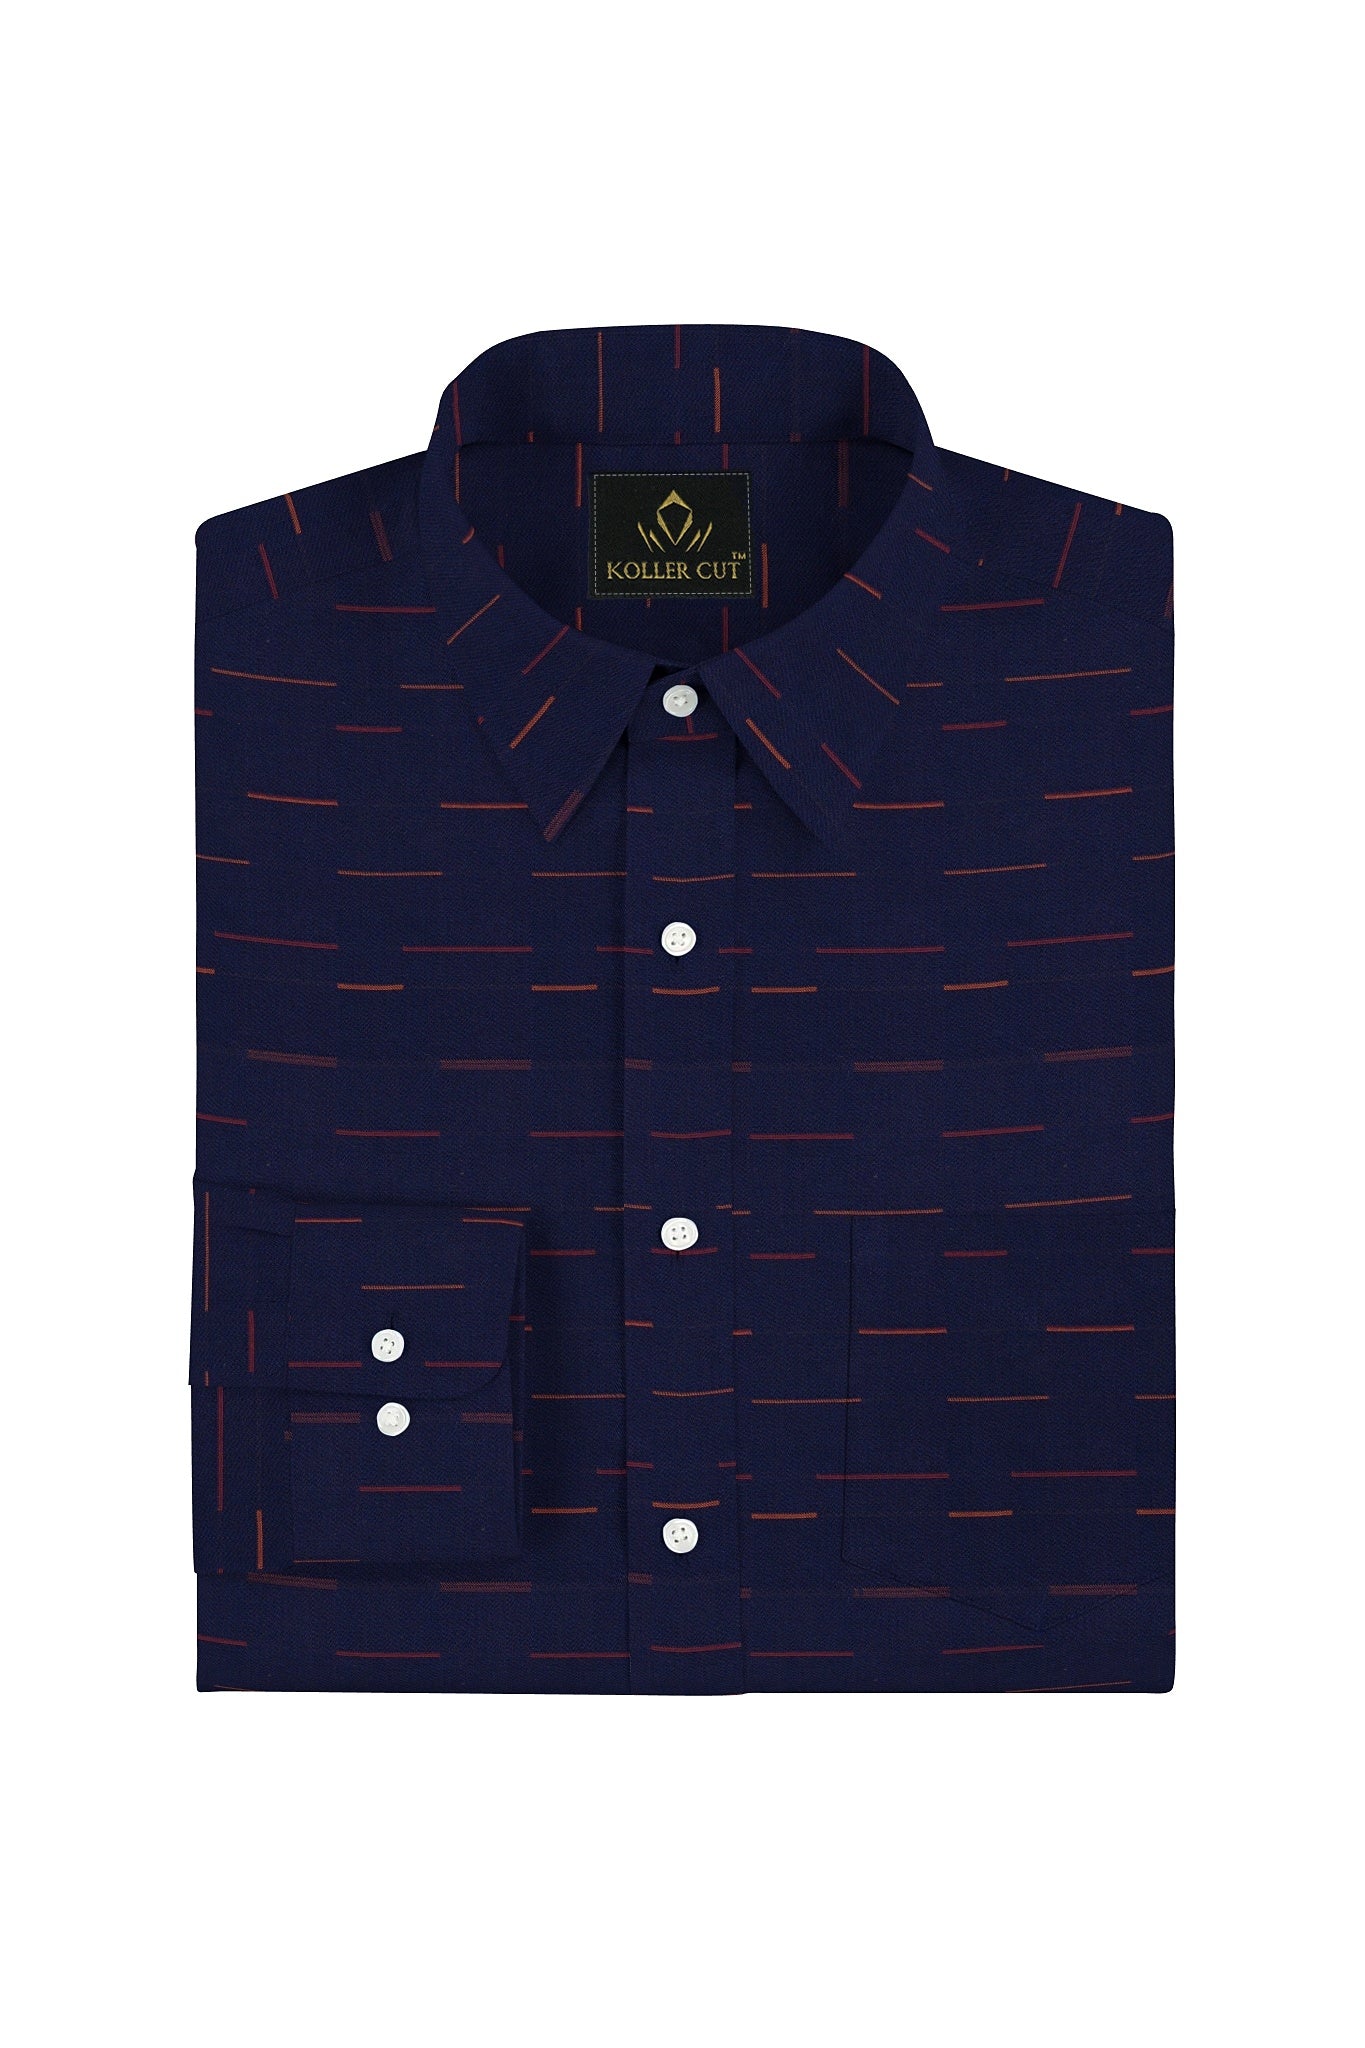 Sodalite Blue and Claret Red Jacquard Dash Stripes Premium Cotton Shirt